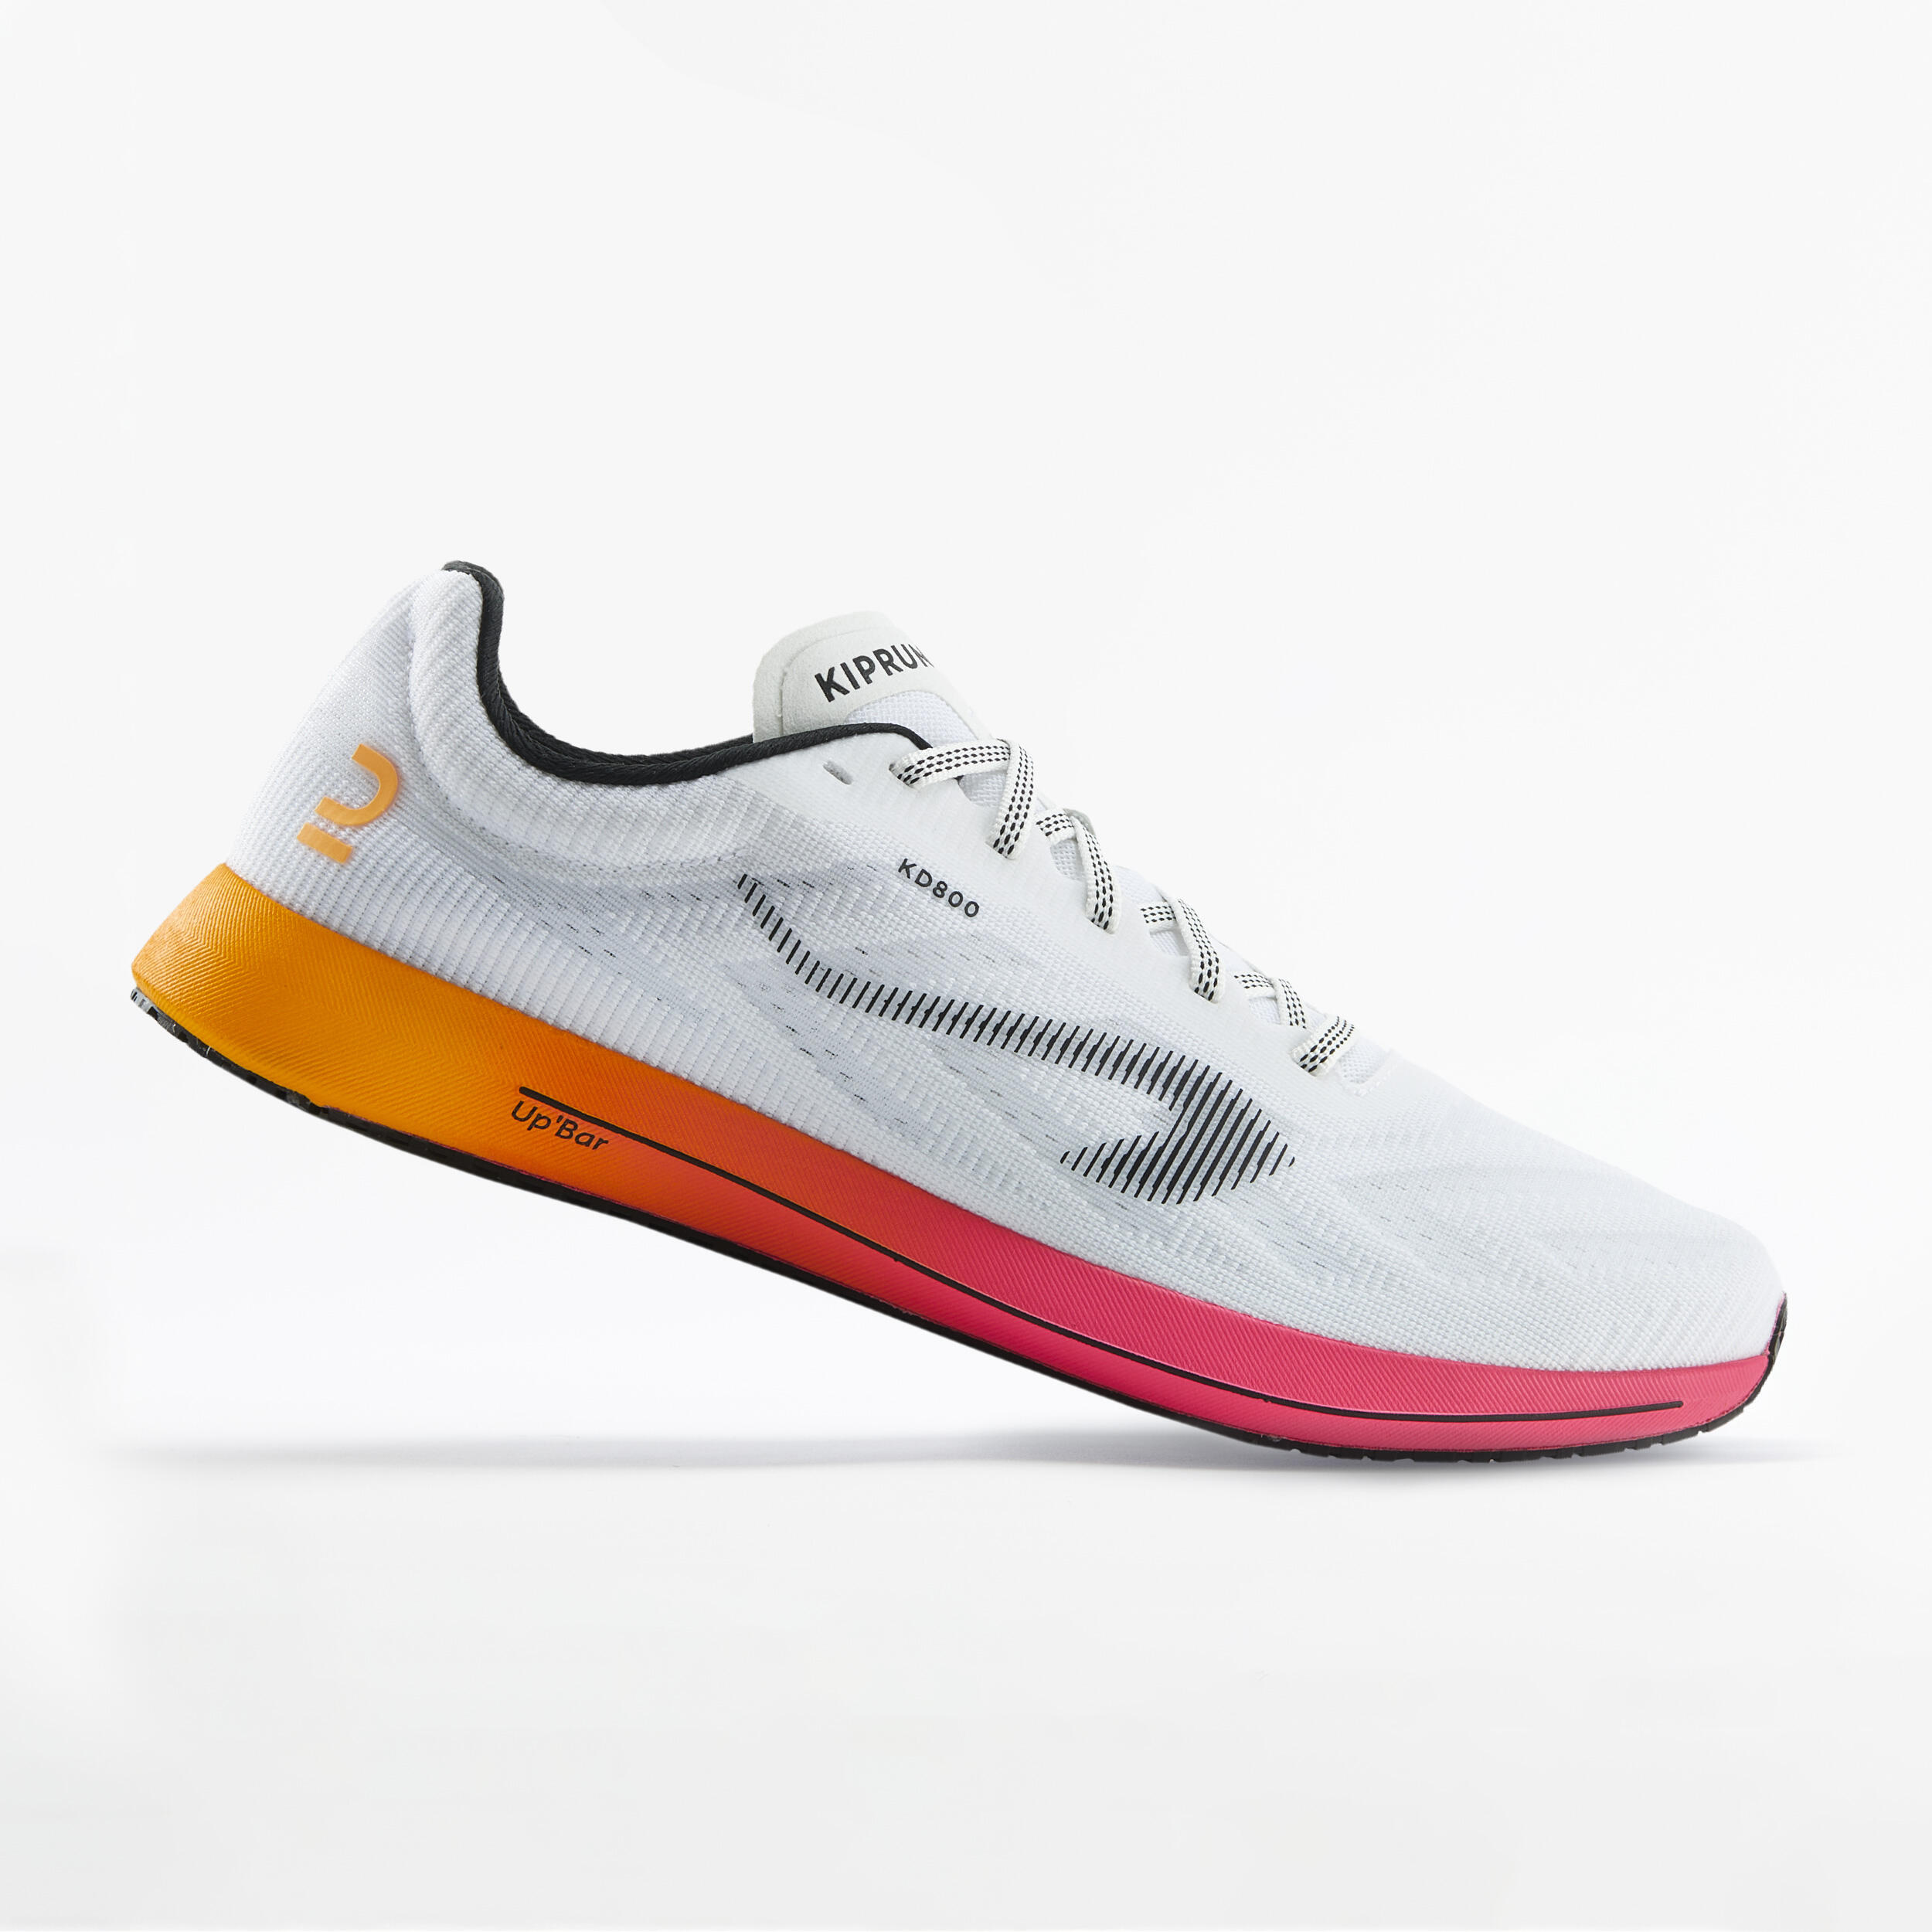 Decathlon | Scarpe running uomo KD 800 bianco-arancione-rosa |  Kiprun